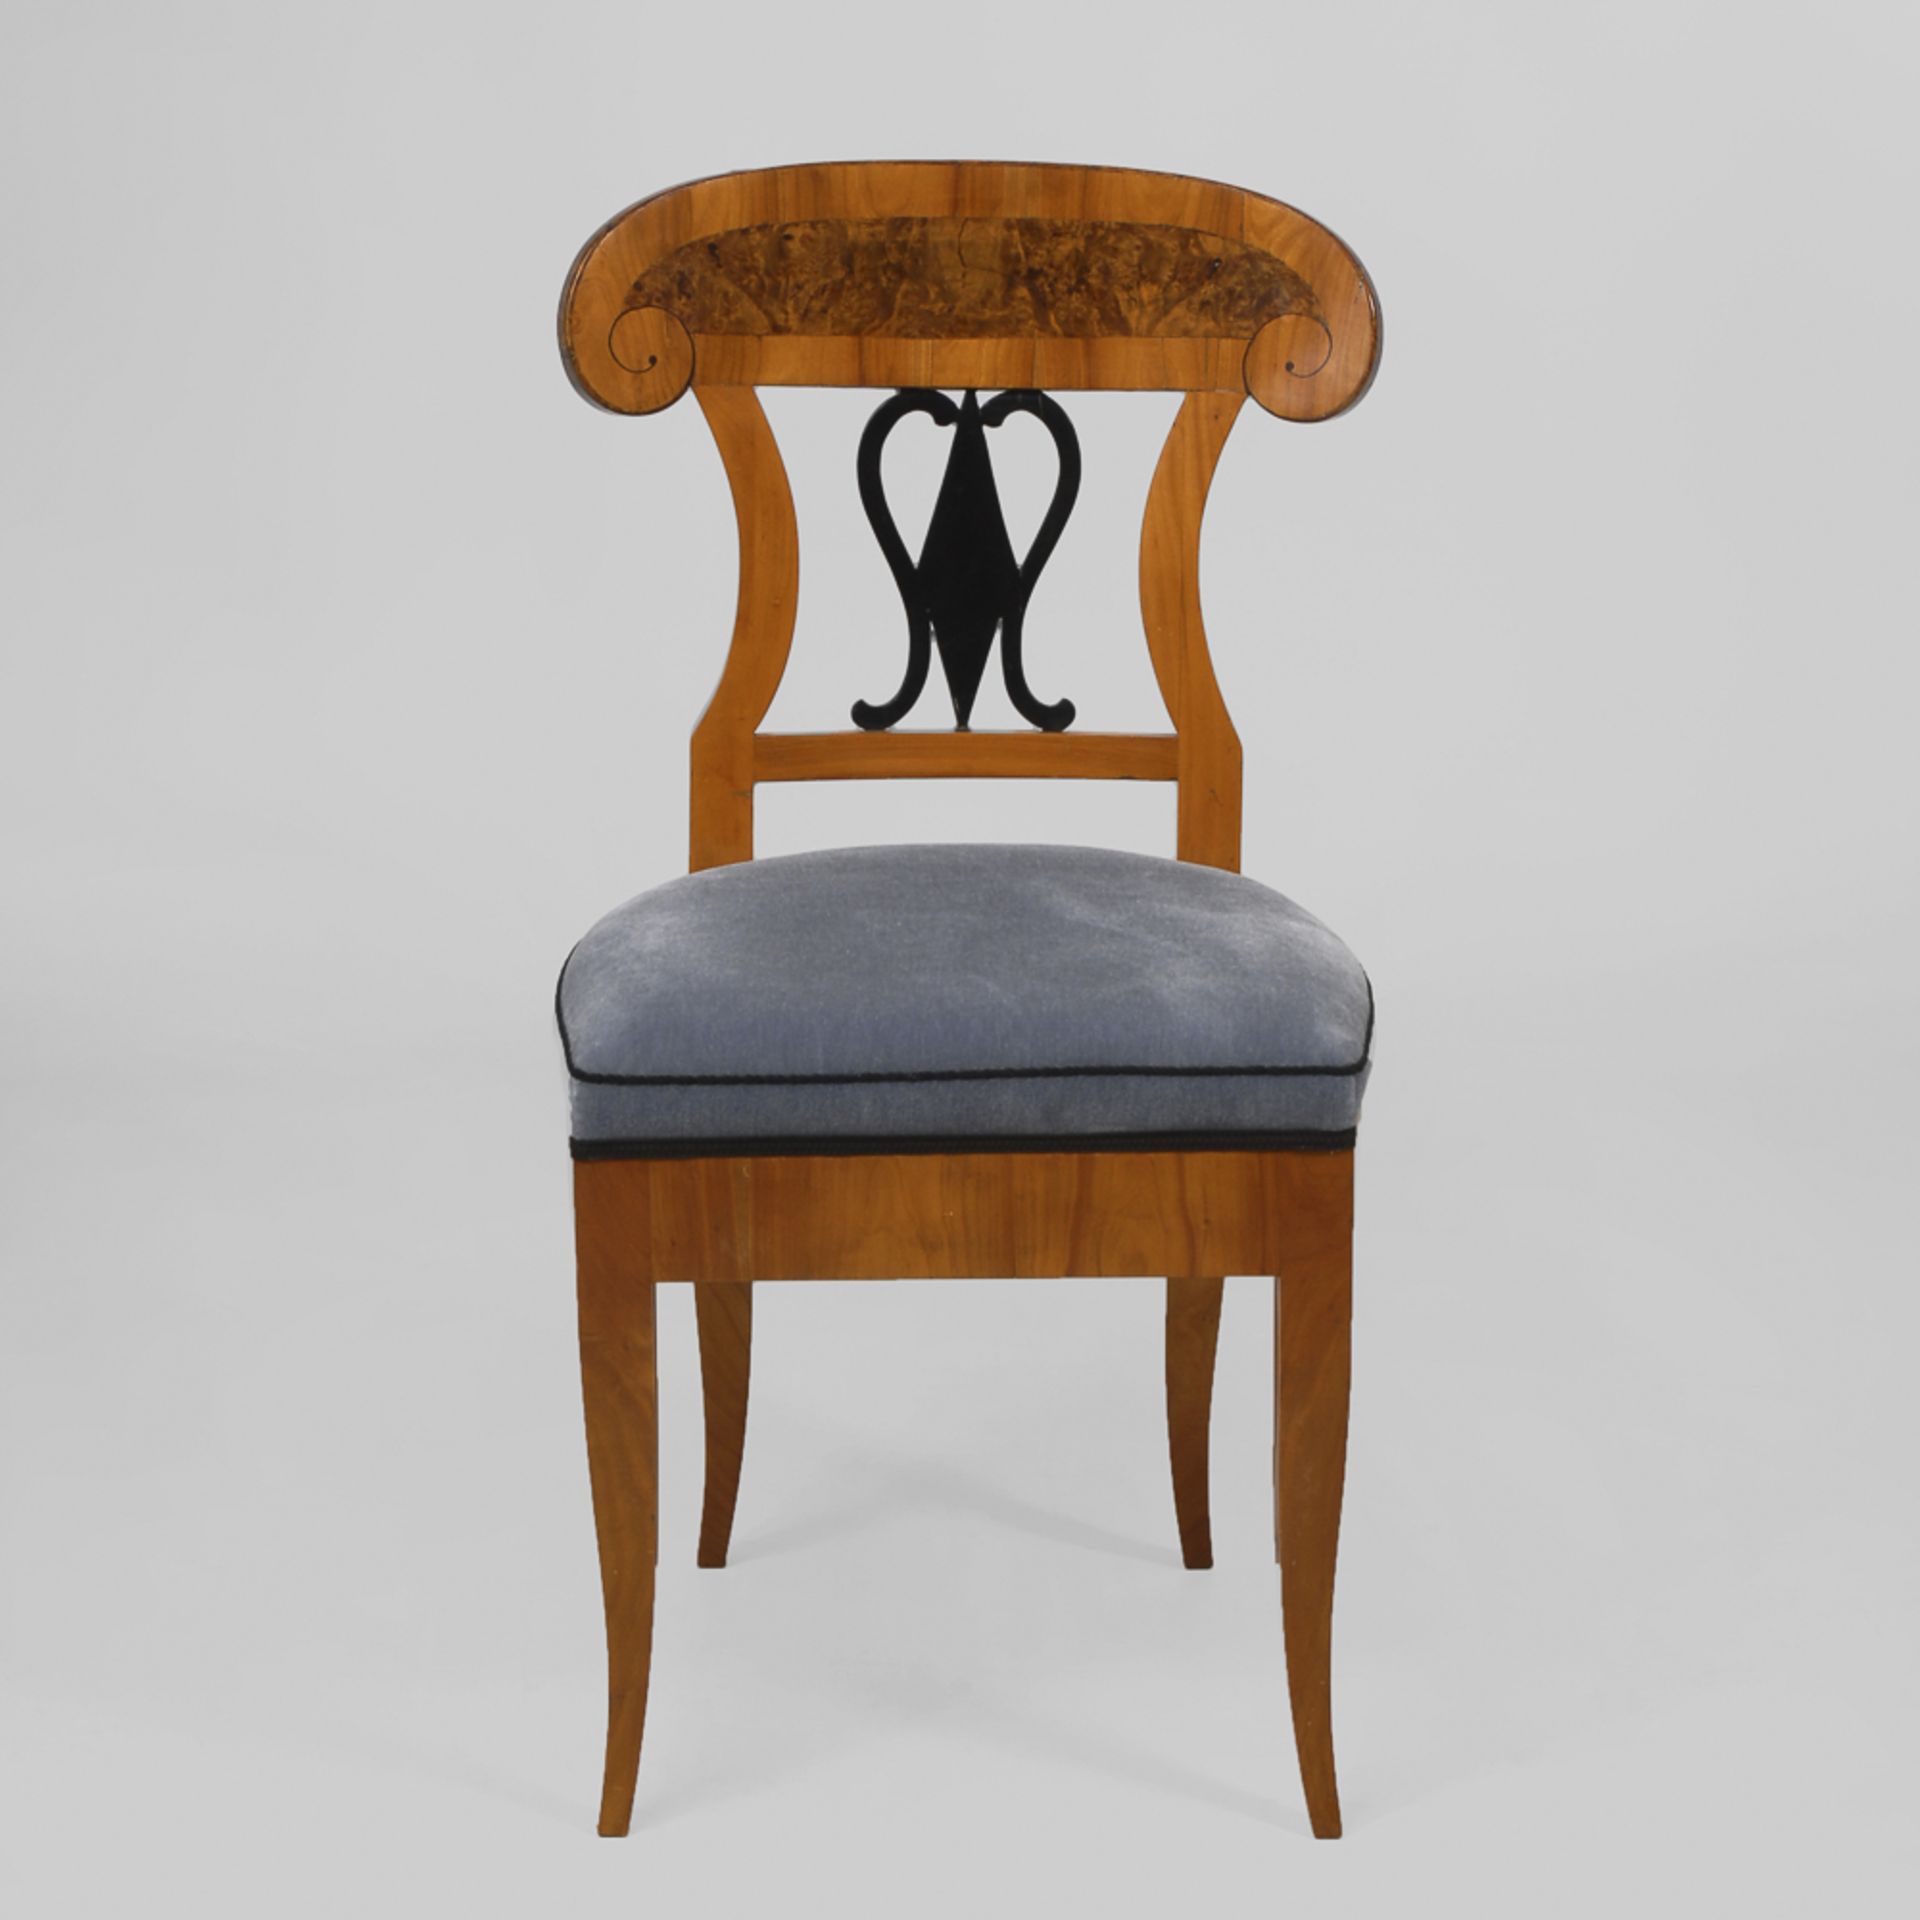 Biedermeier-Stuhl.Um 1820/30. Kirschbaum furniert. H 92 cm. Polsterstuhl mit schaufelförmiger